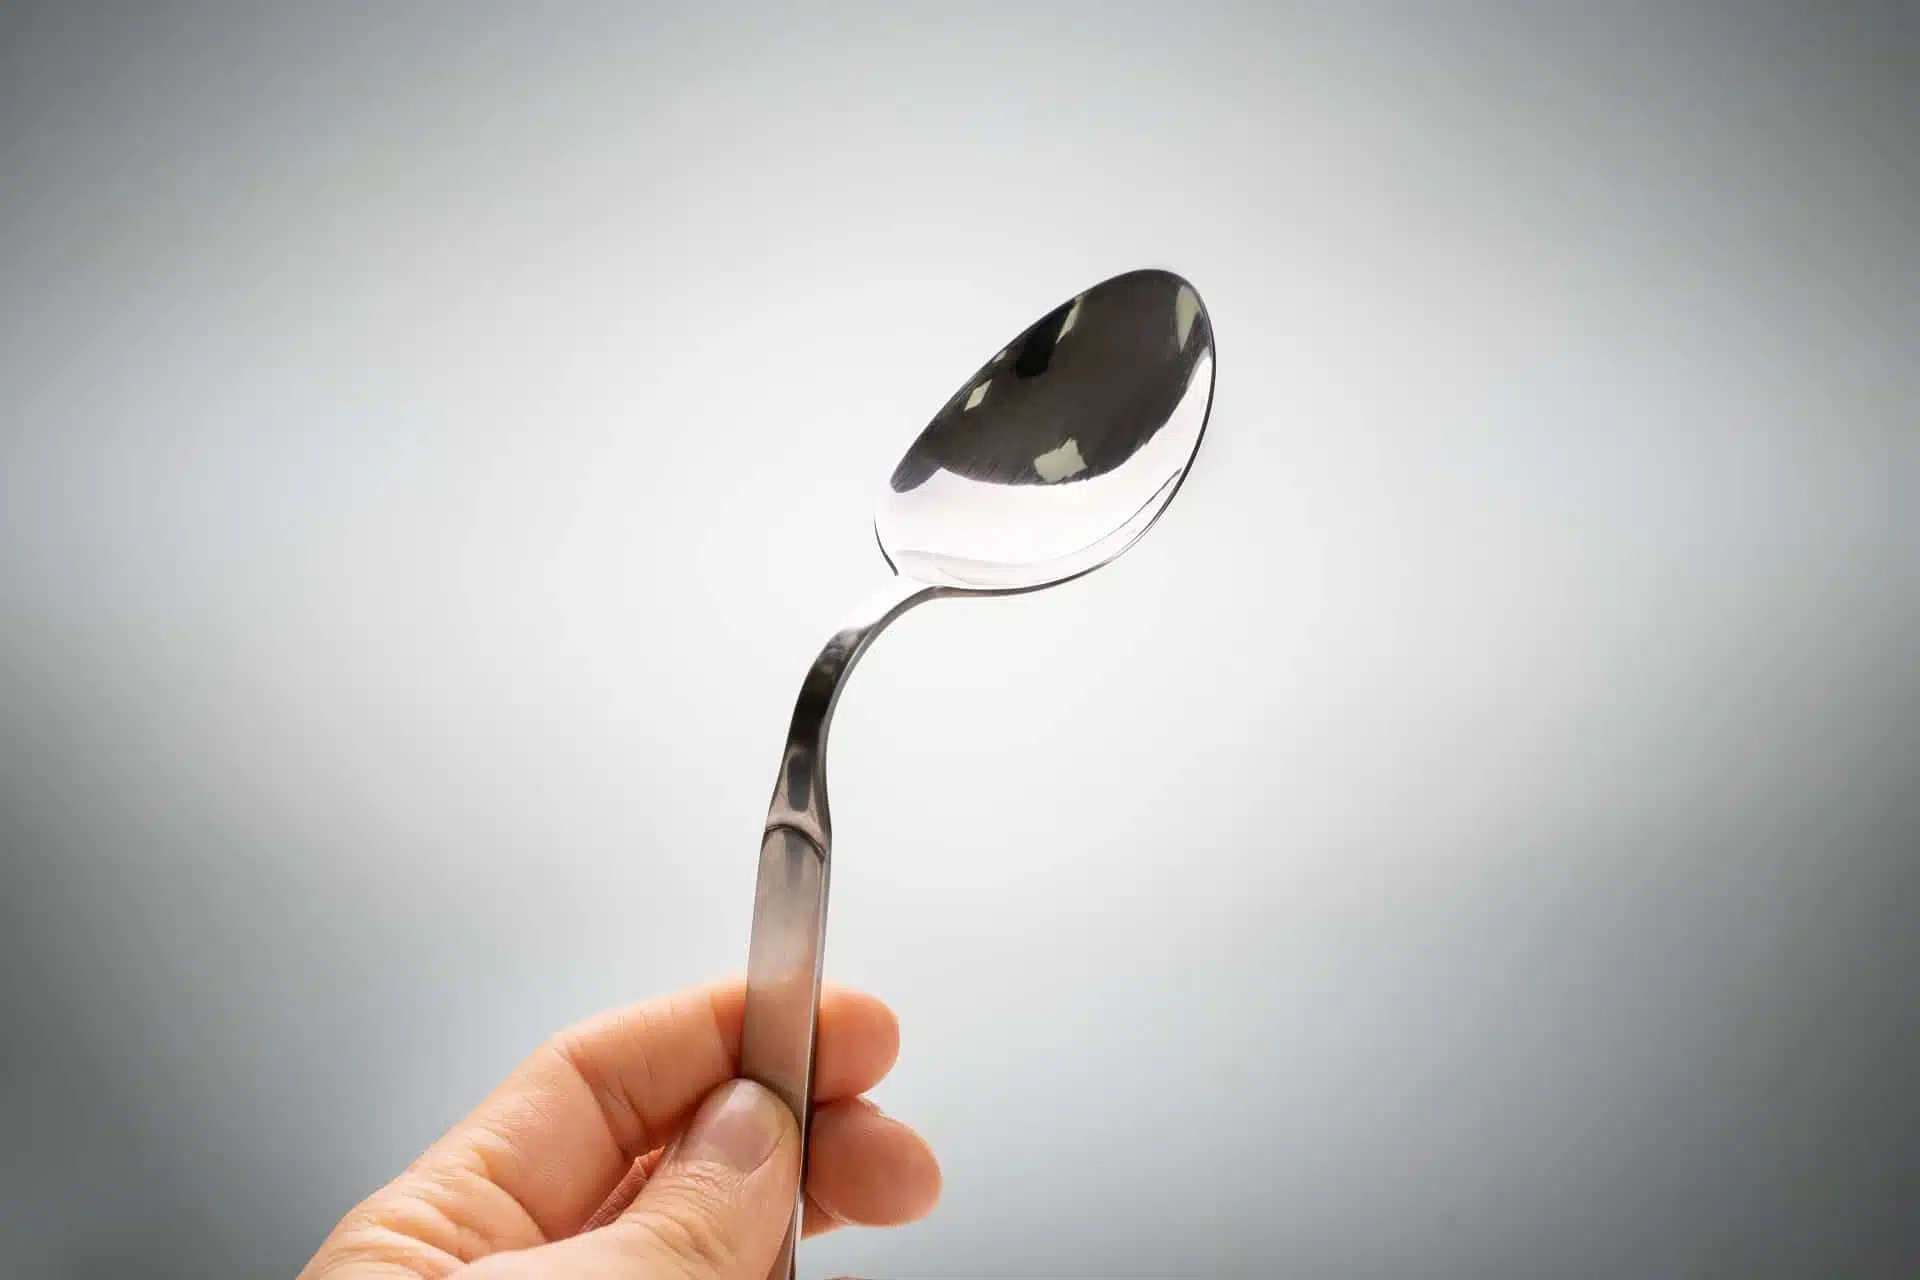 a metal spoon bent through the power of telekinesis